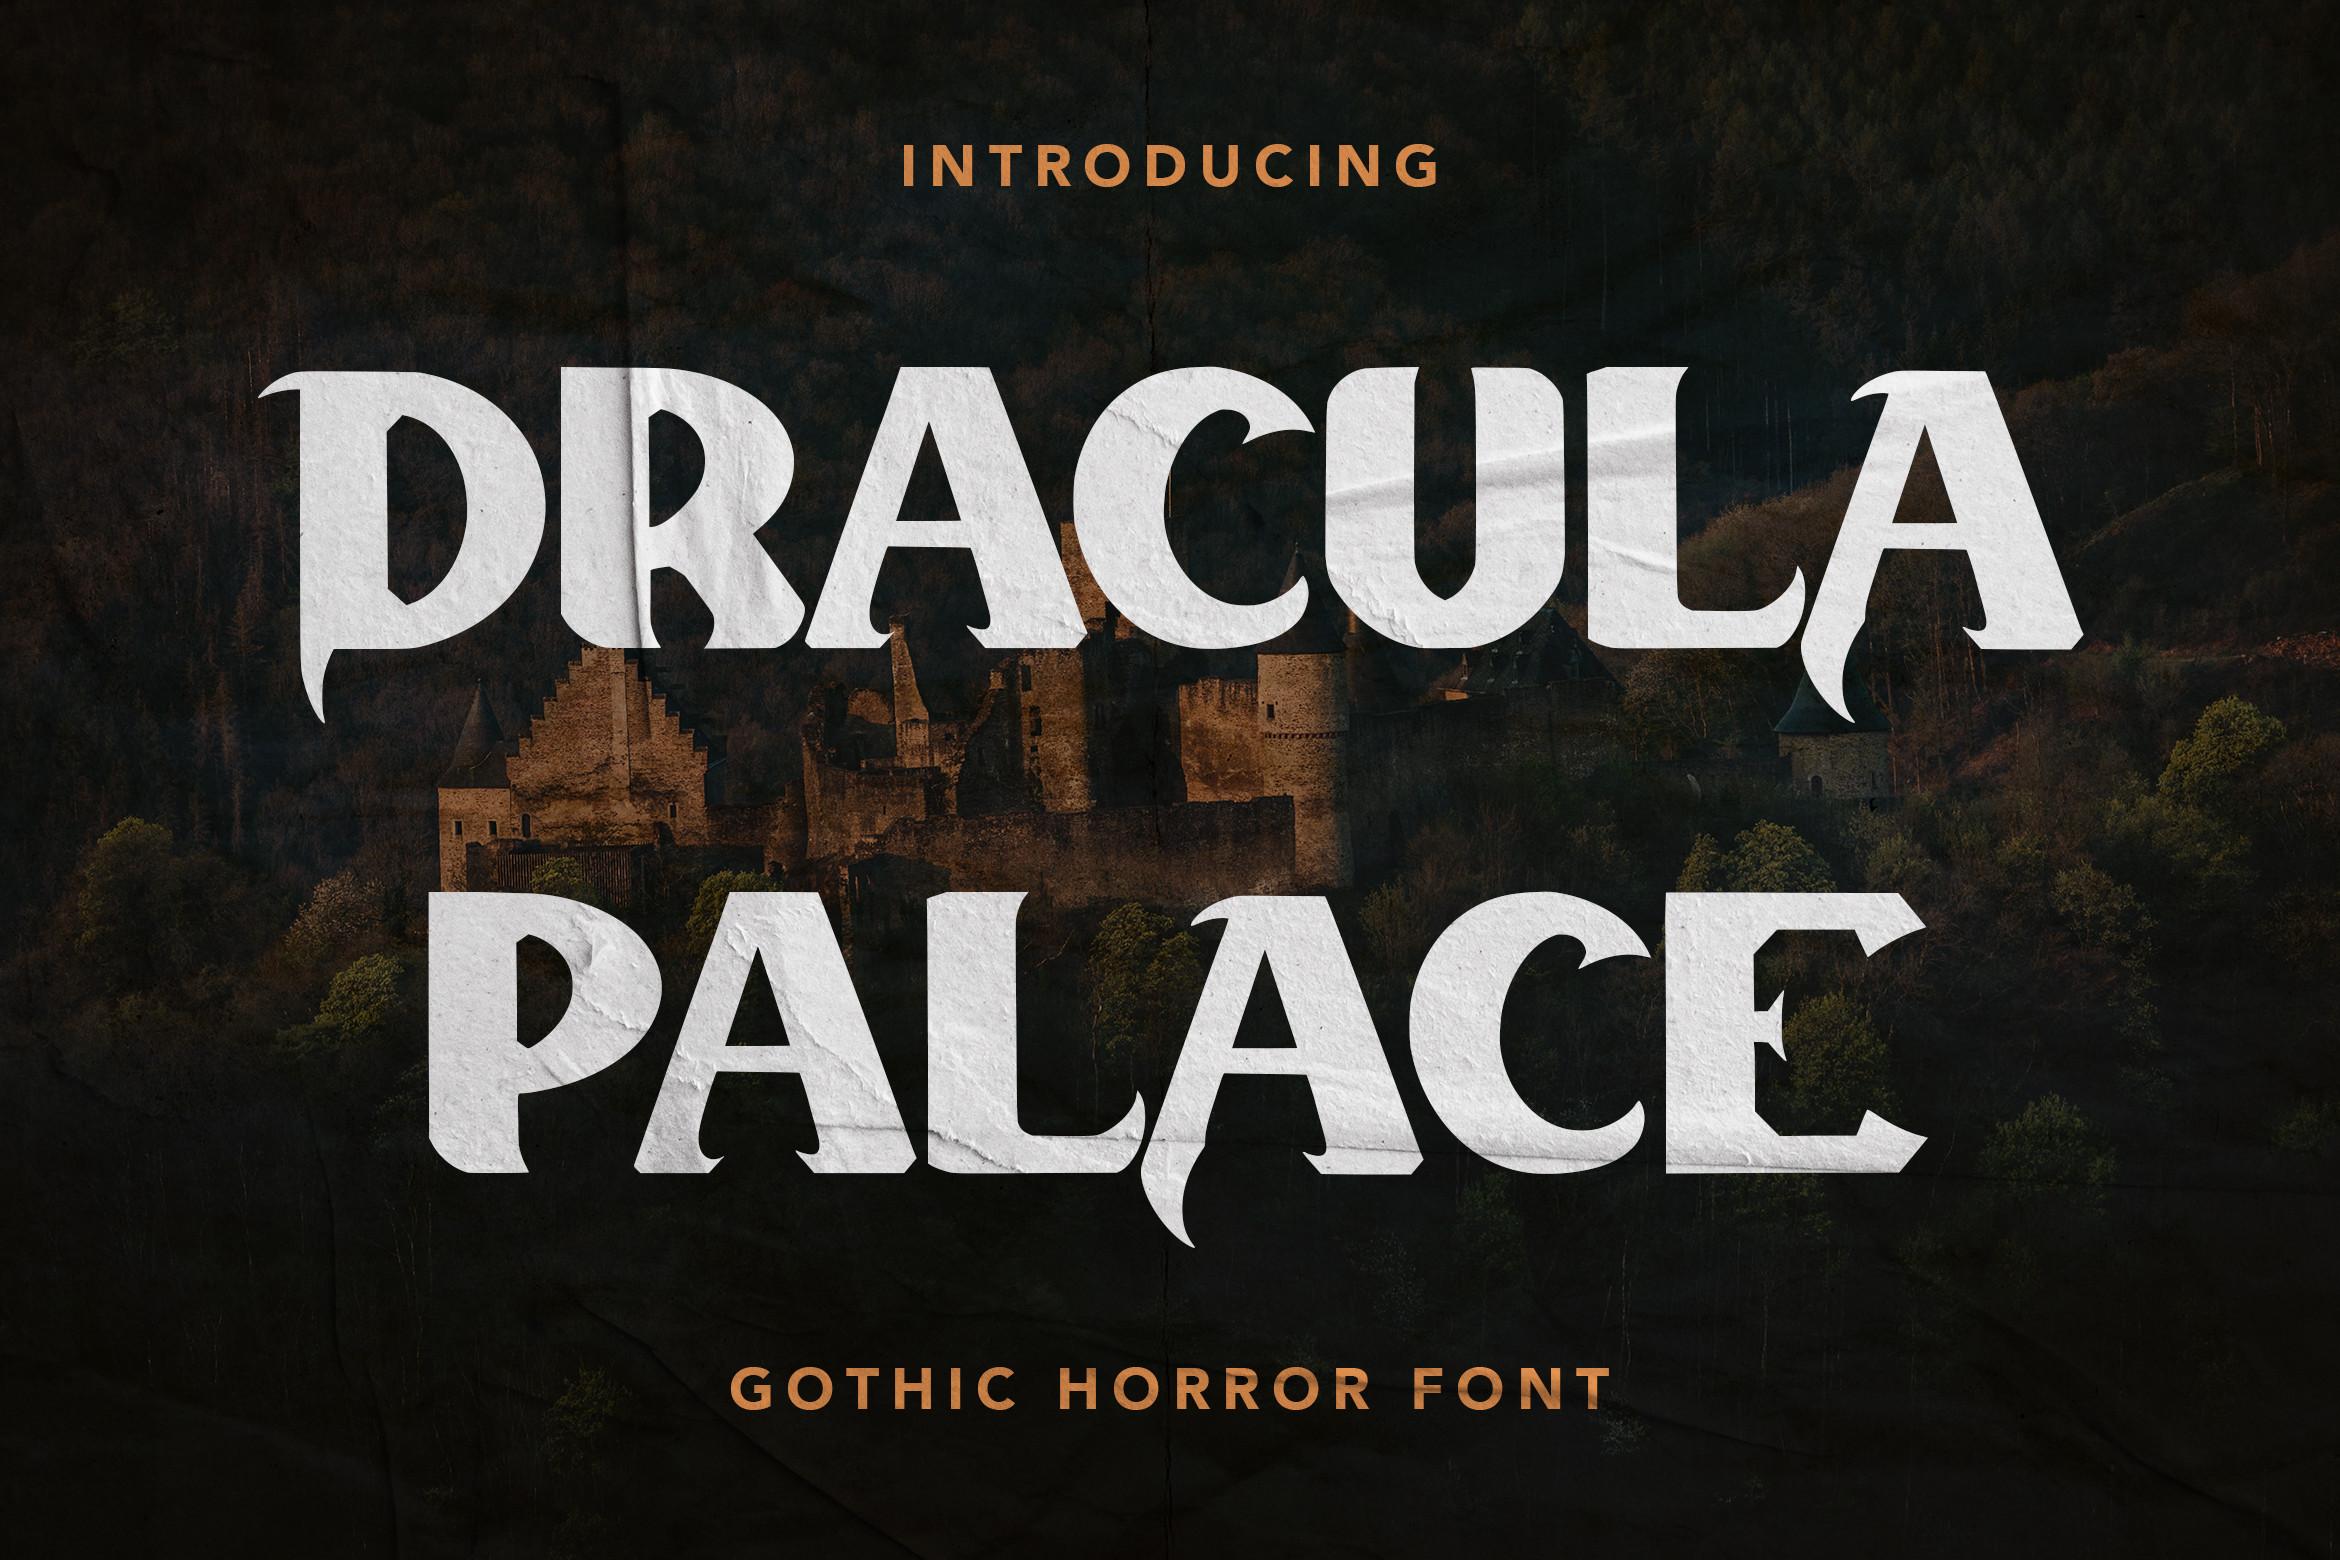 Dracula Palace Font